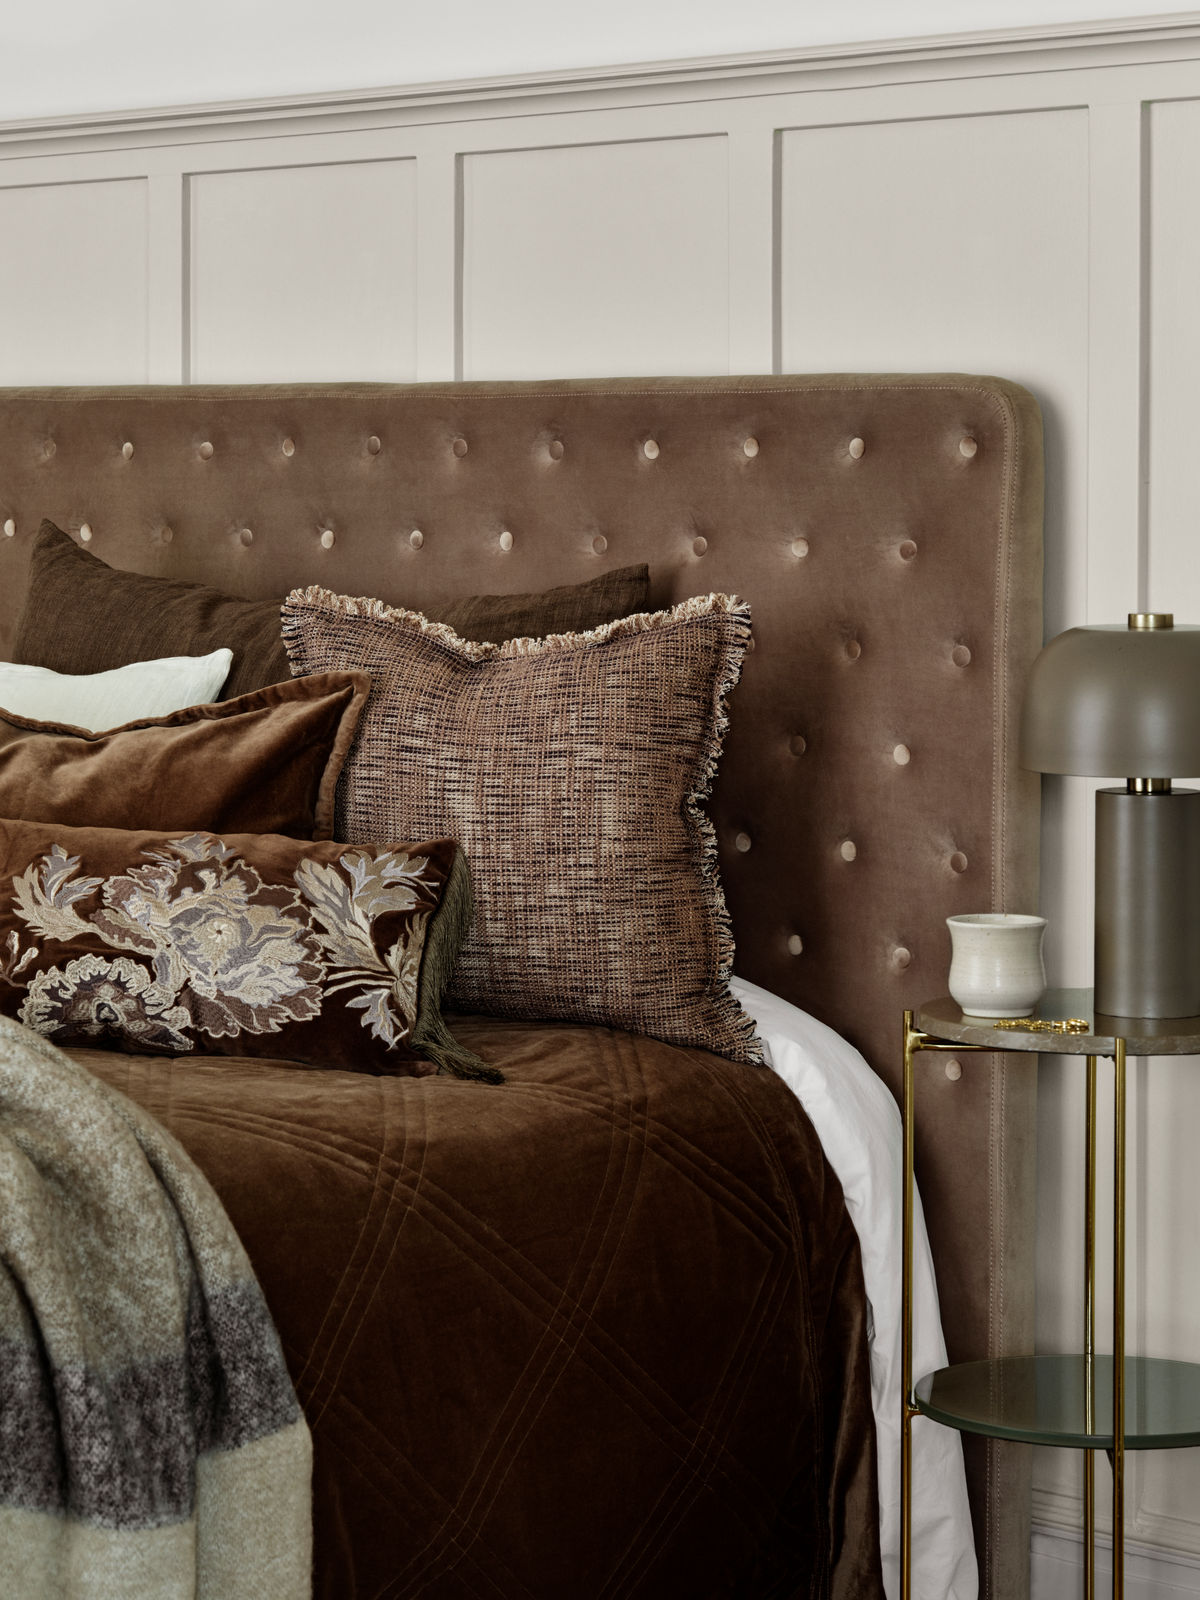 Cozy Living Luxury Light Linen Cushion Cover - IVORY